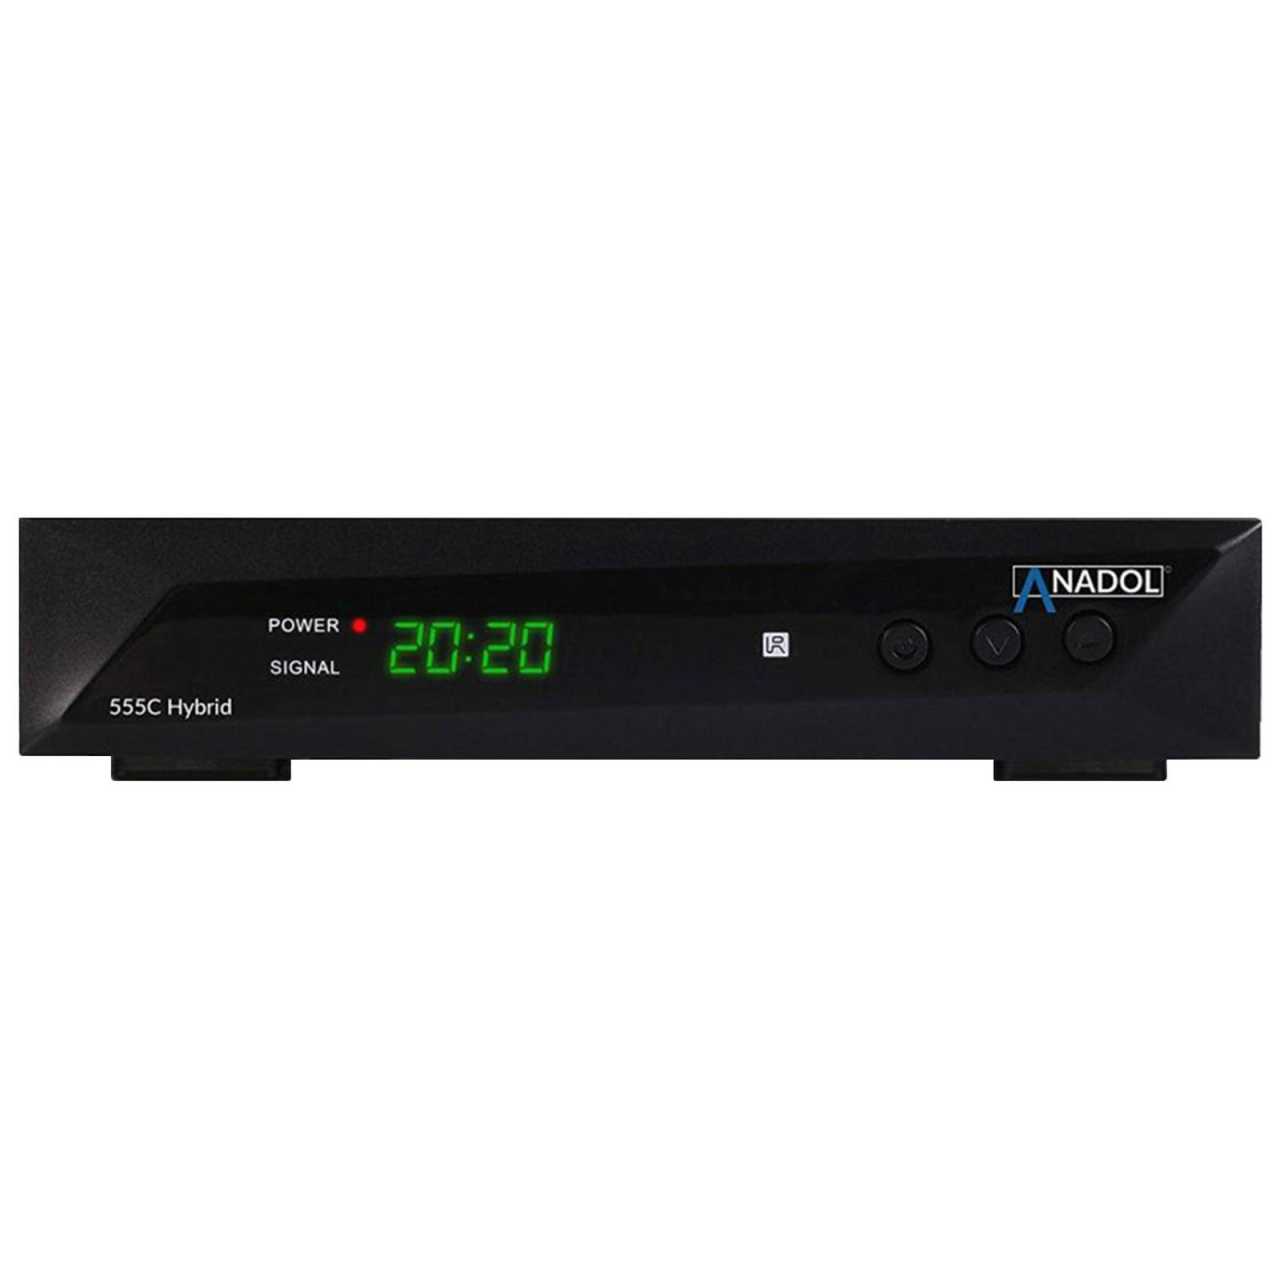 Anadol HD 555c Full HD DVB-T2/DVB-C/C2 Kabel Receiver PVR Timeshift USB HDTV mit DVB-T Antenne von Anadol